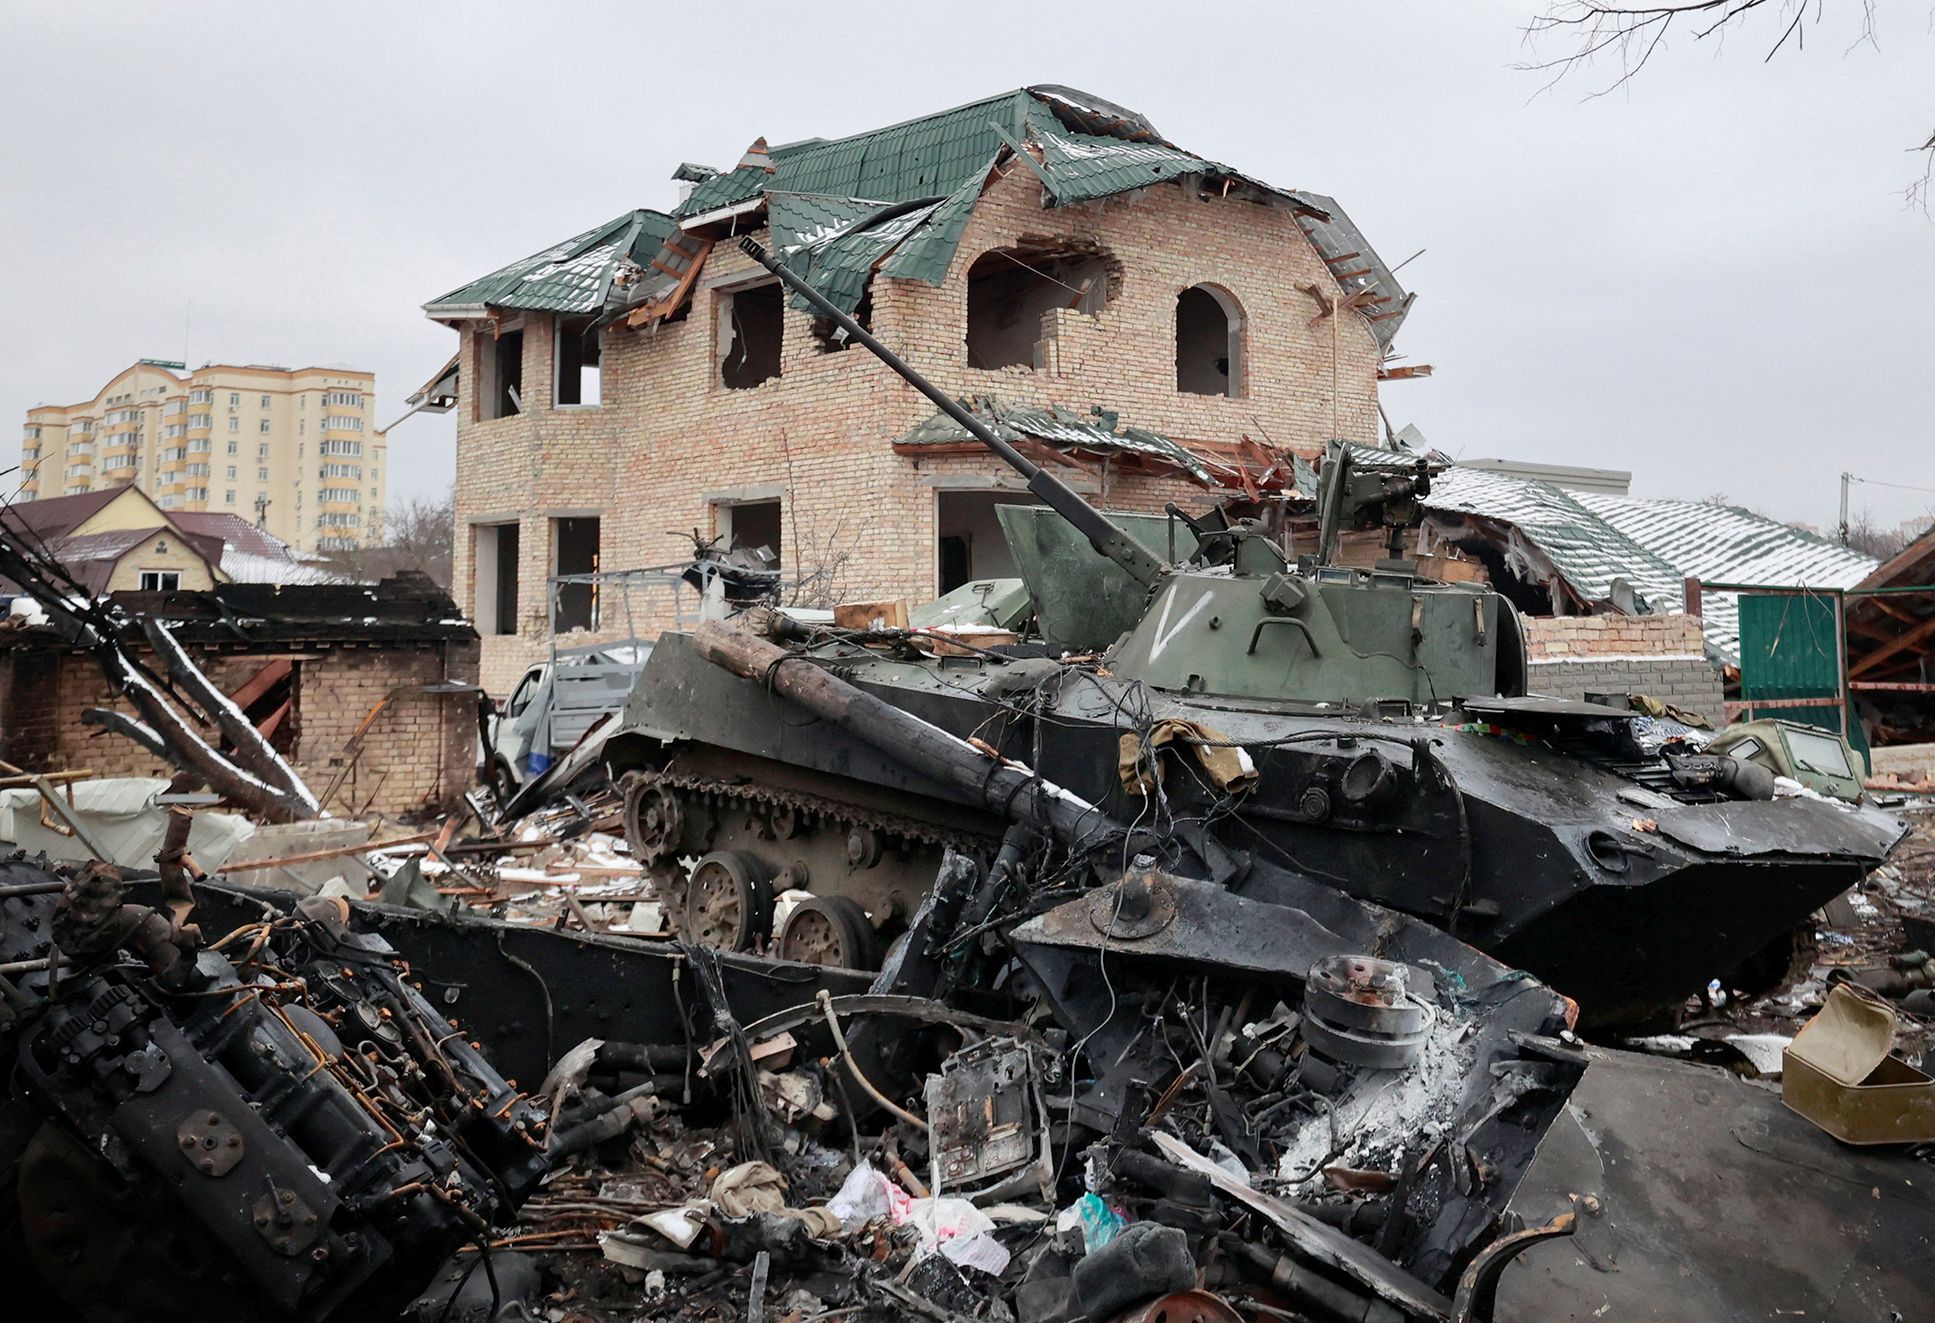 Foto / Buča / Zničené tanky / Ukrajina / 1. 3. 2022